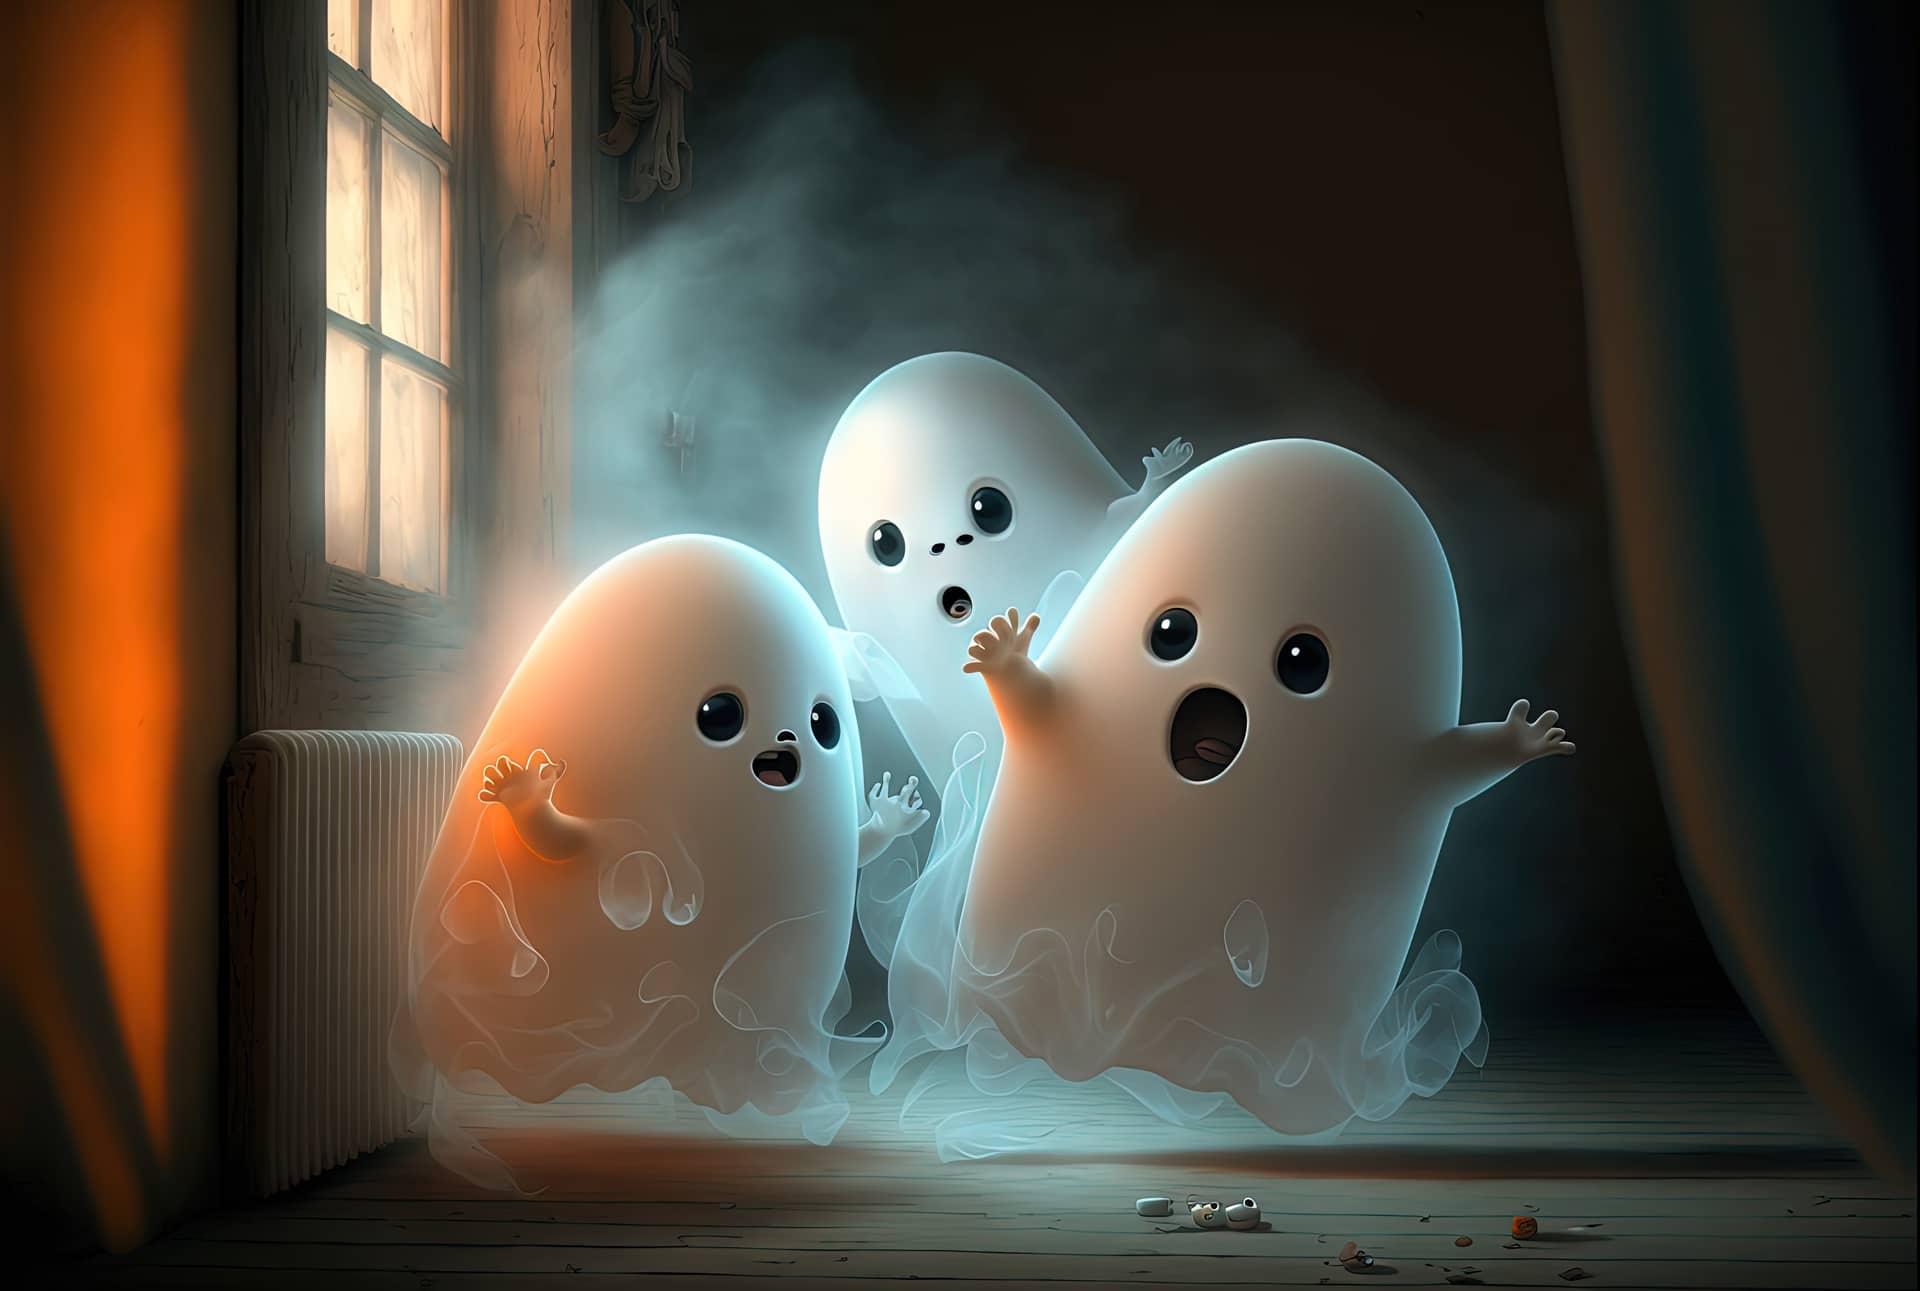 Cute so scary ghost playing having fun generative nice image